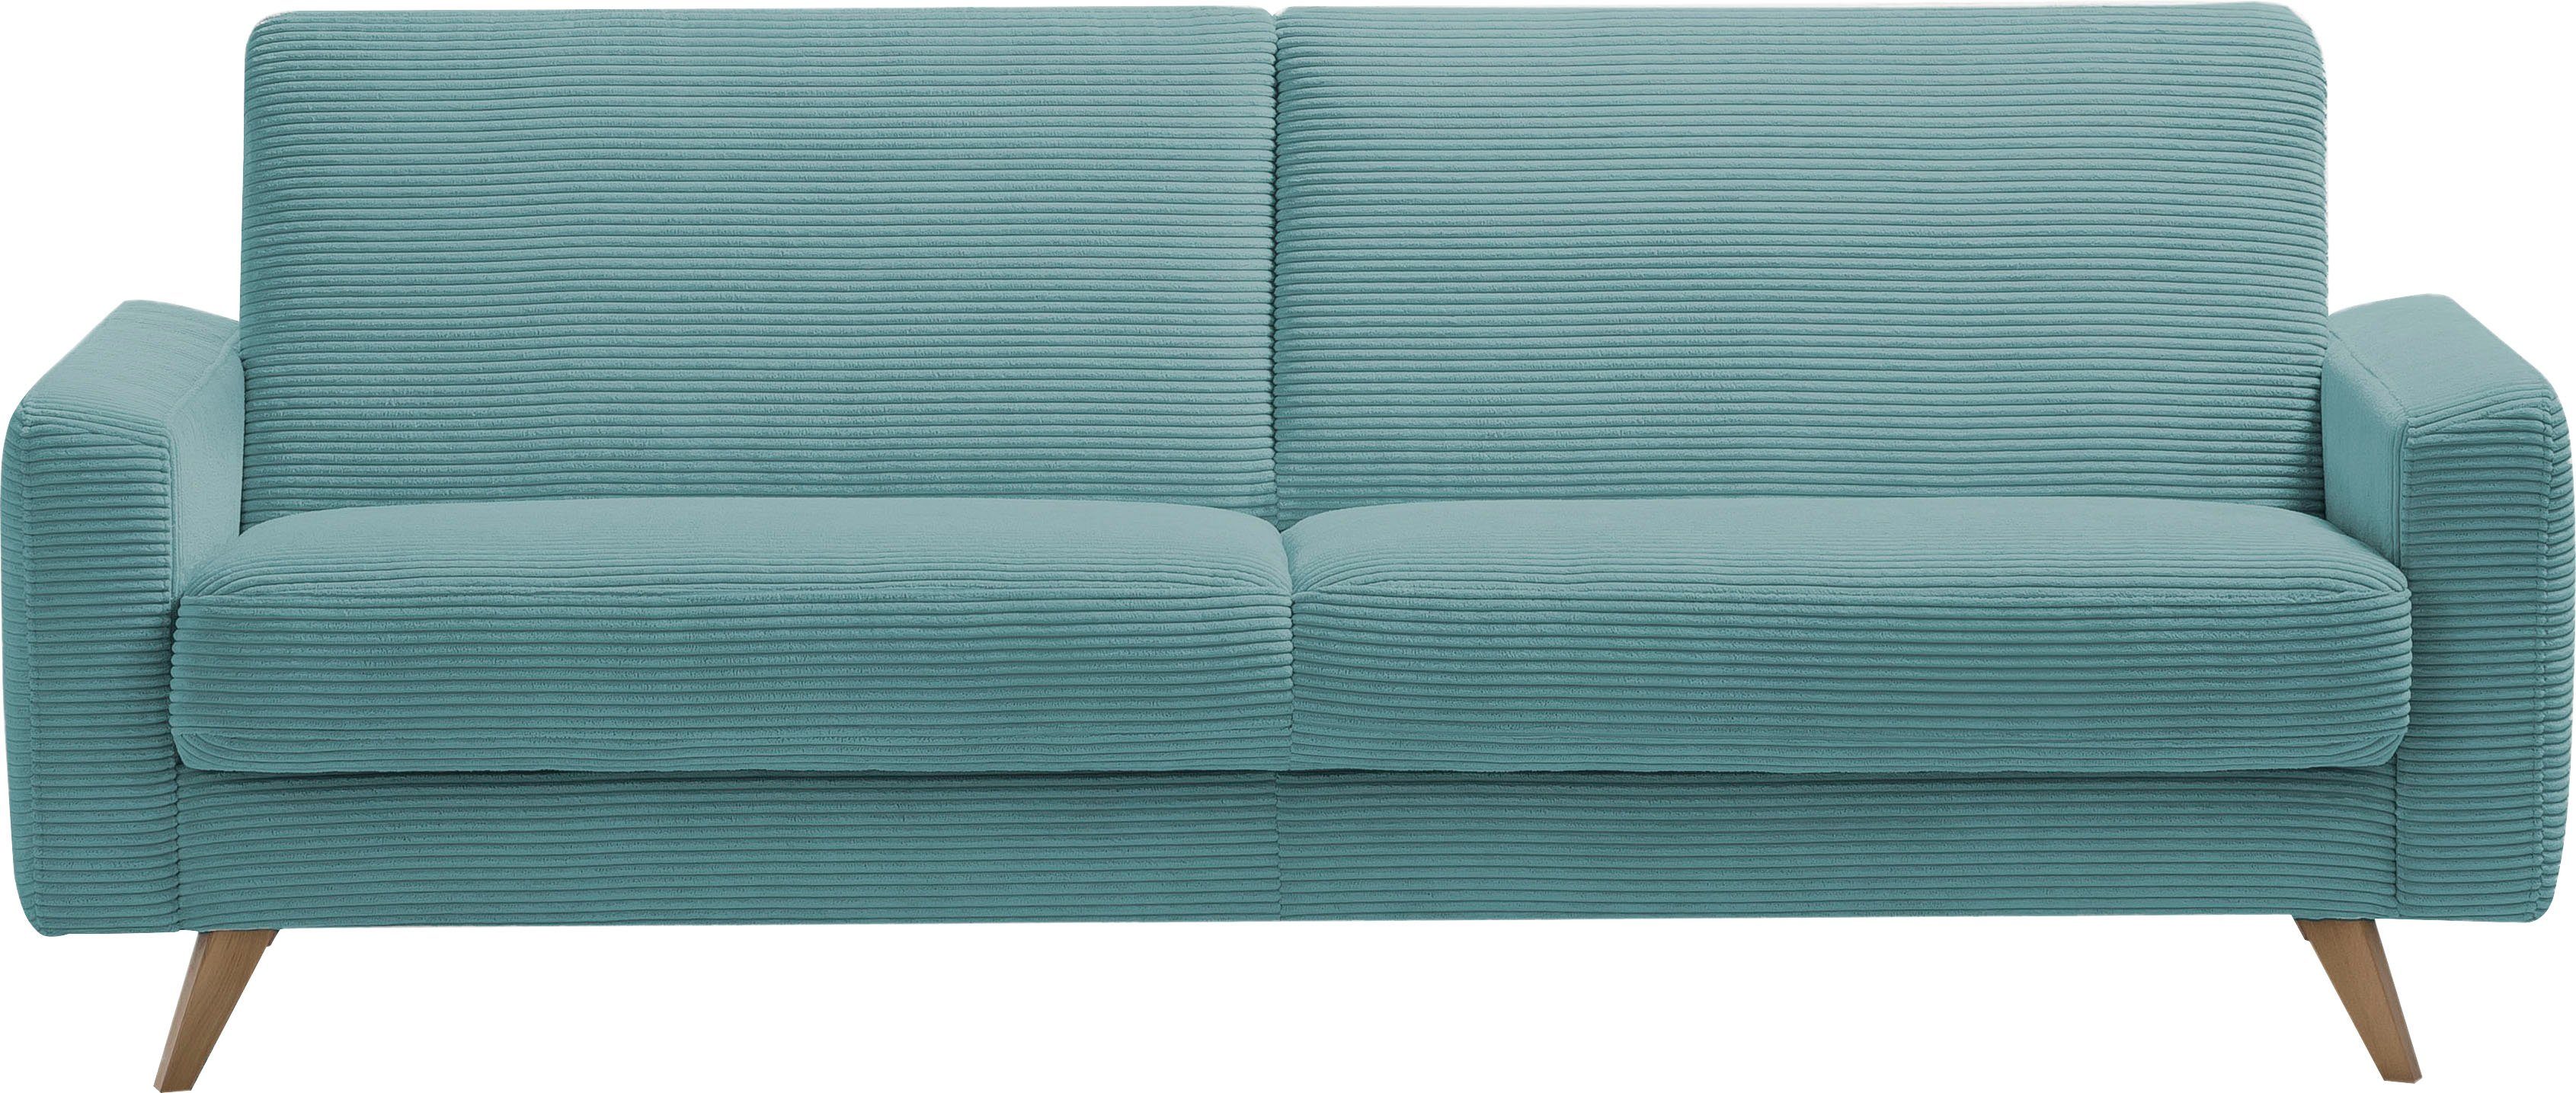 Bettfunktion Bettkasten - sofa fashion exxpo und 3-Sitzer Samso, Inklusive sky